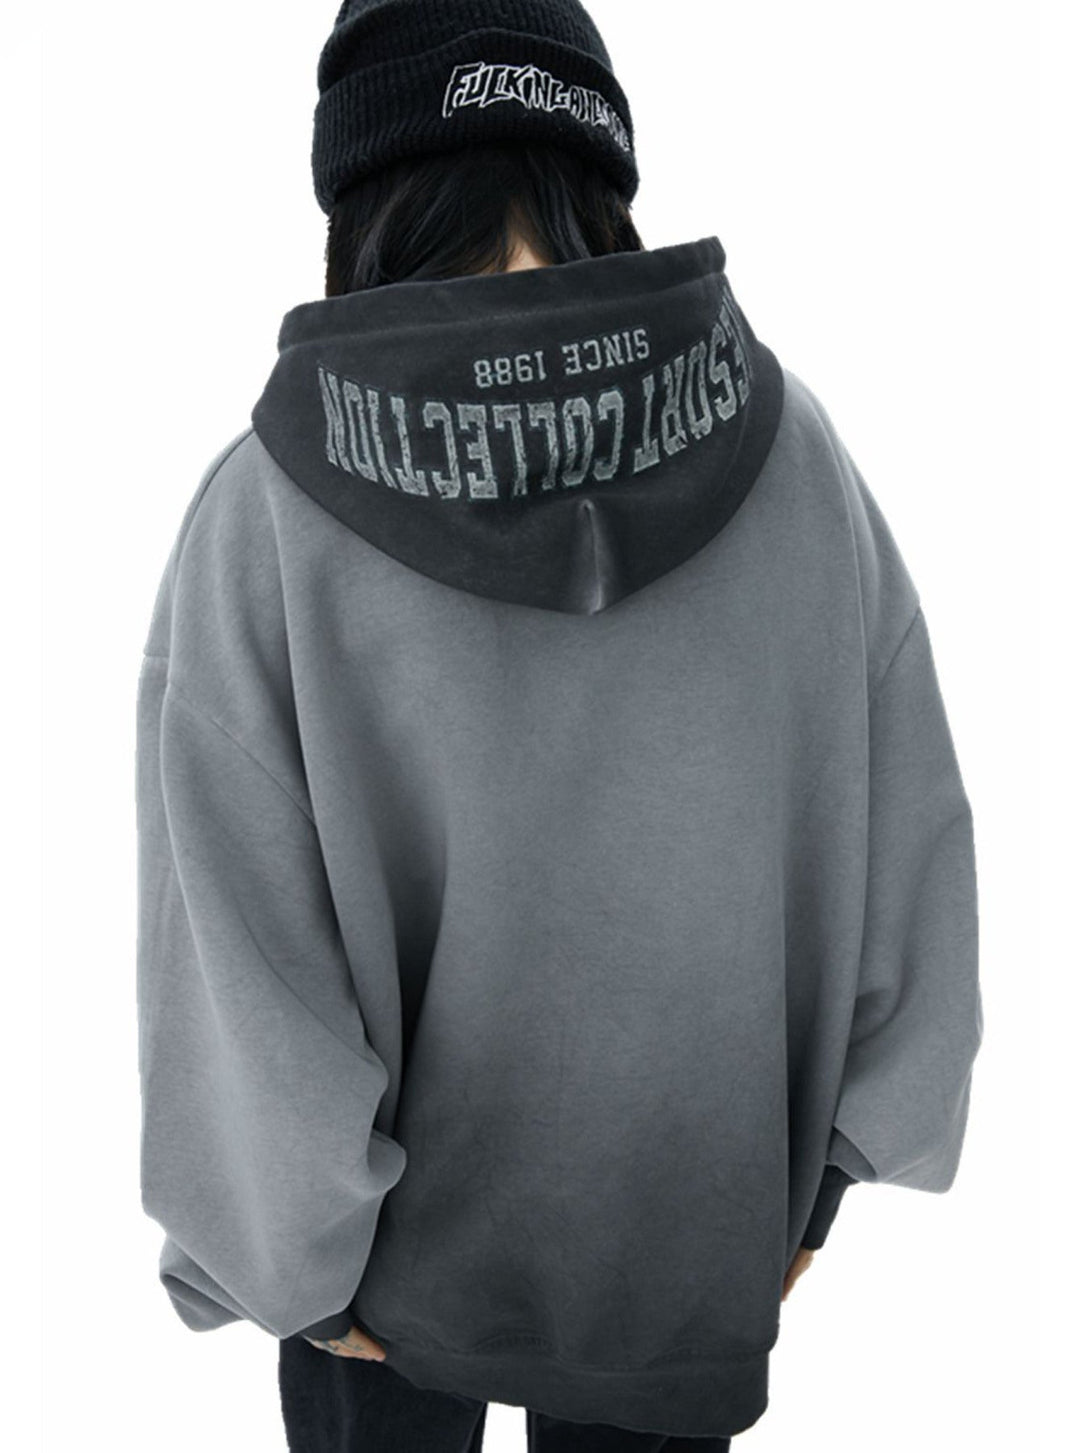 Majesda® - Vintage Gradient Hooded Loose Sweatshirt - 1842- Outfit Ideas - Streetwear Fashion - majesda.com